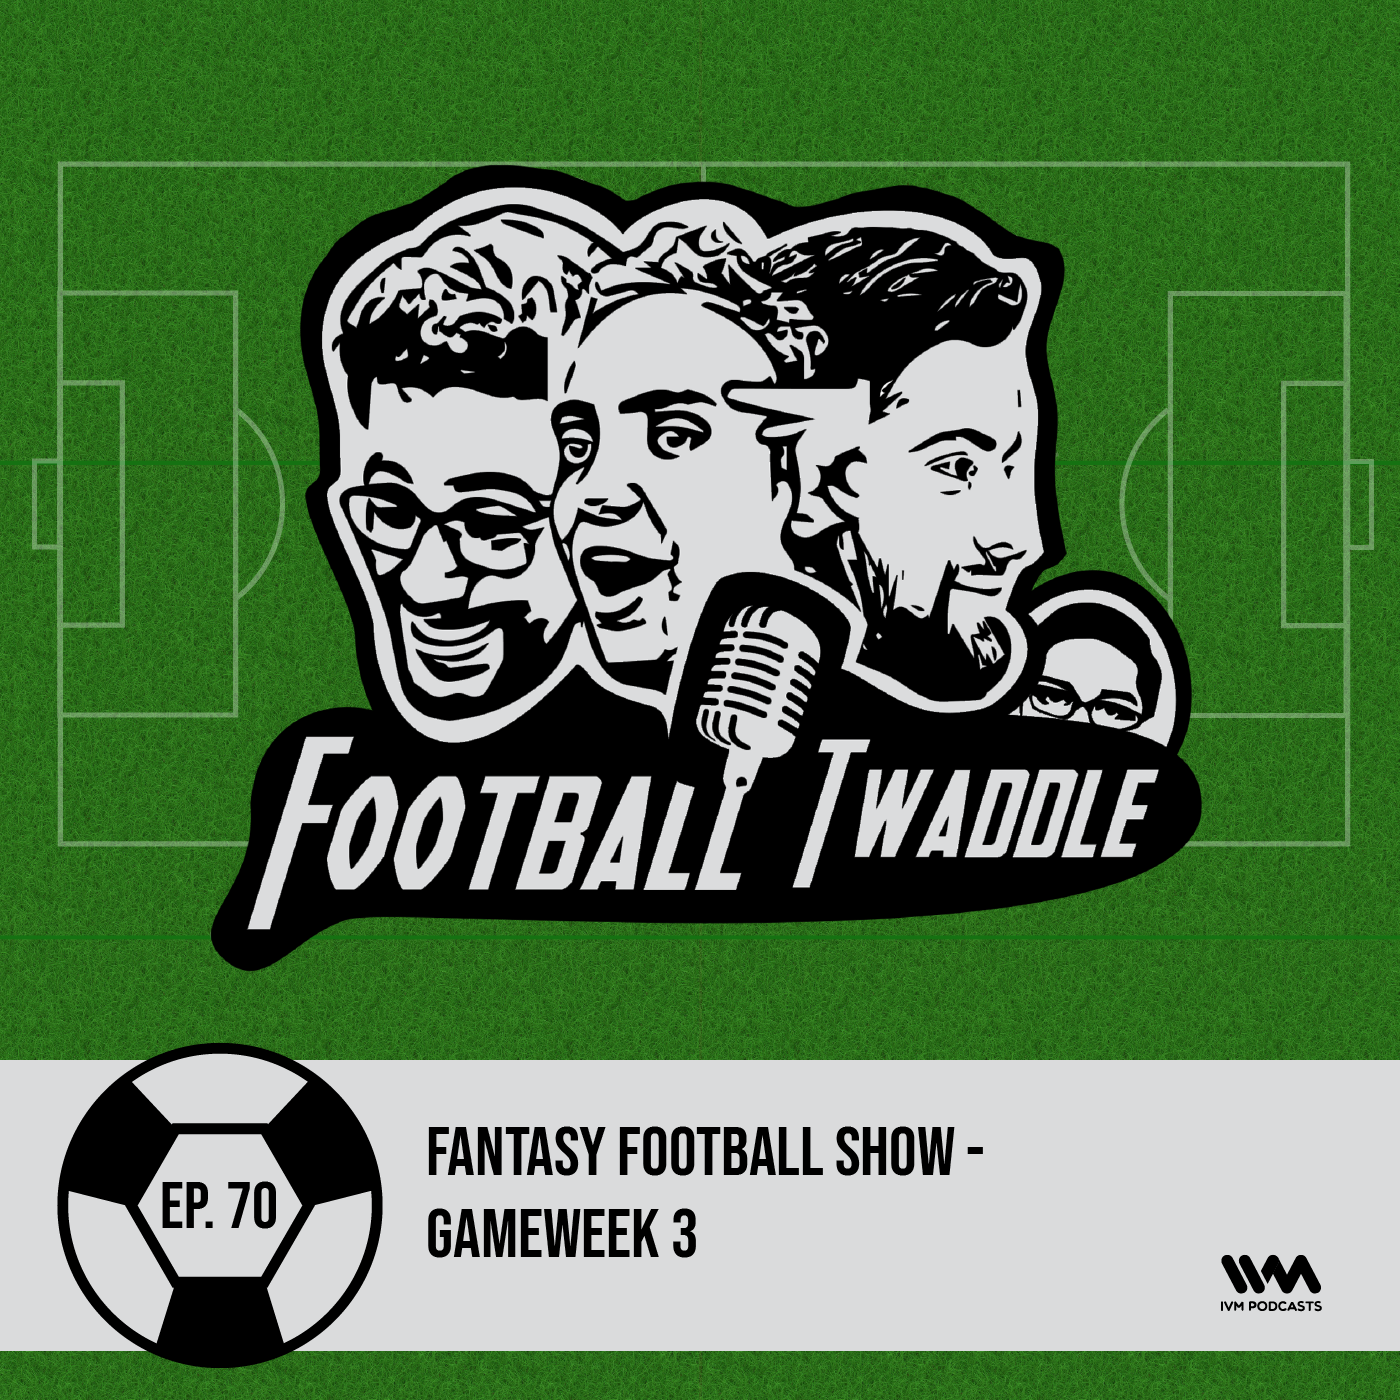 Fantasy Football Show - Gameweek 3